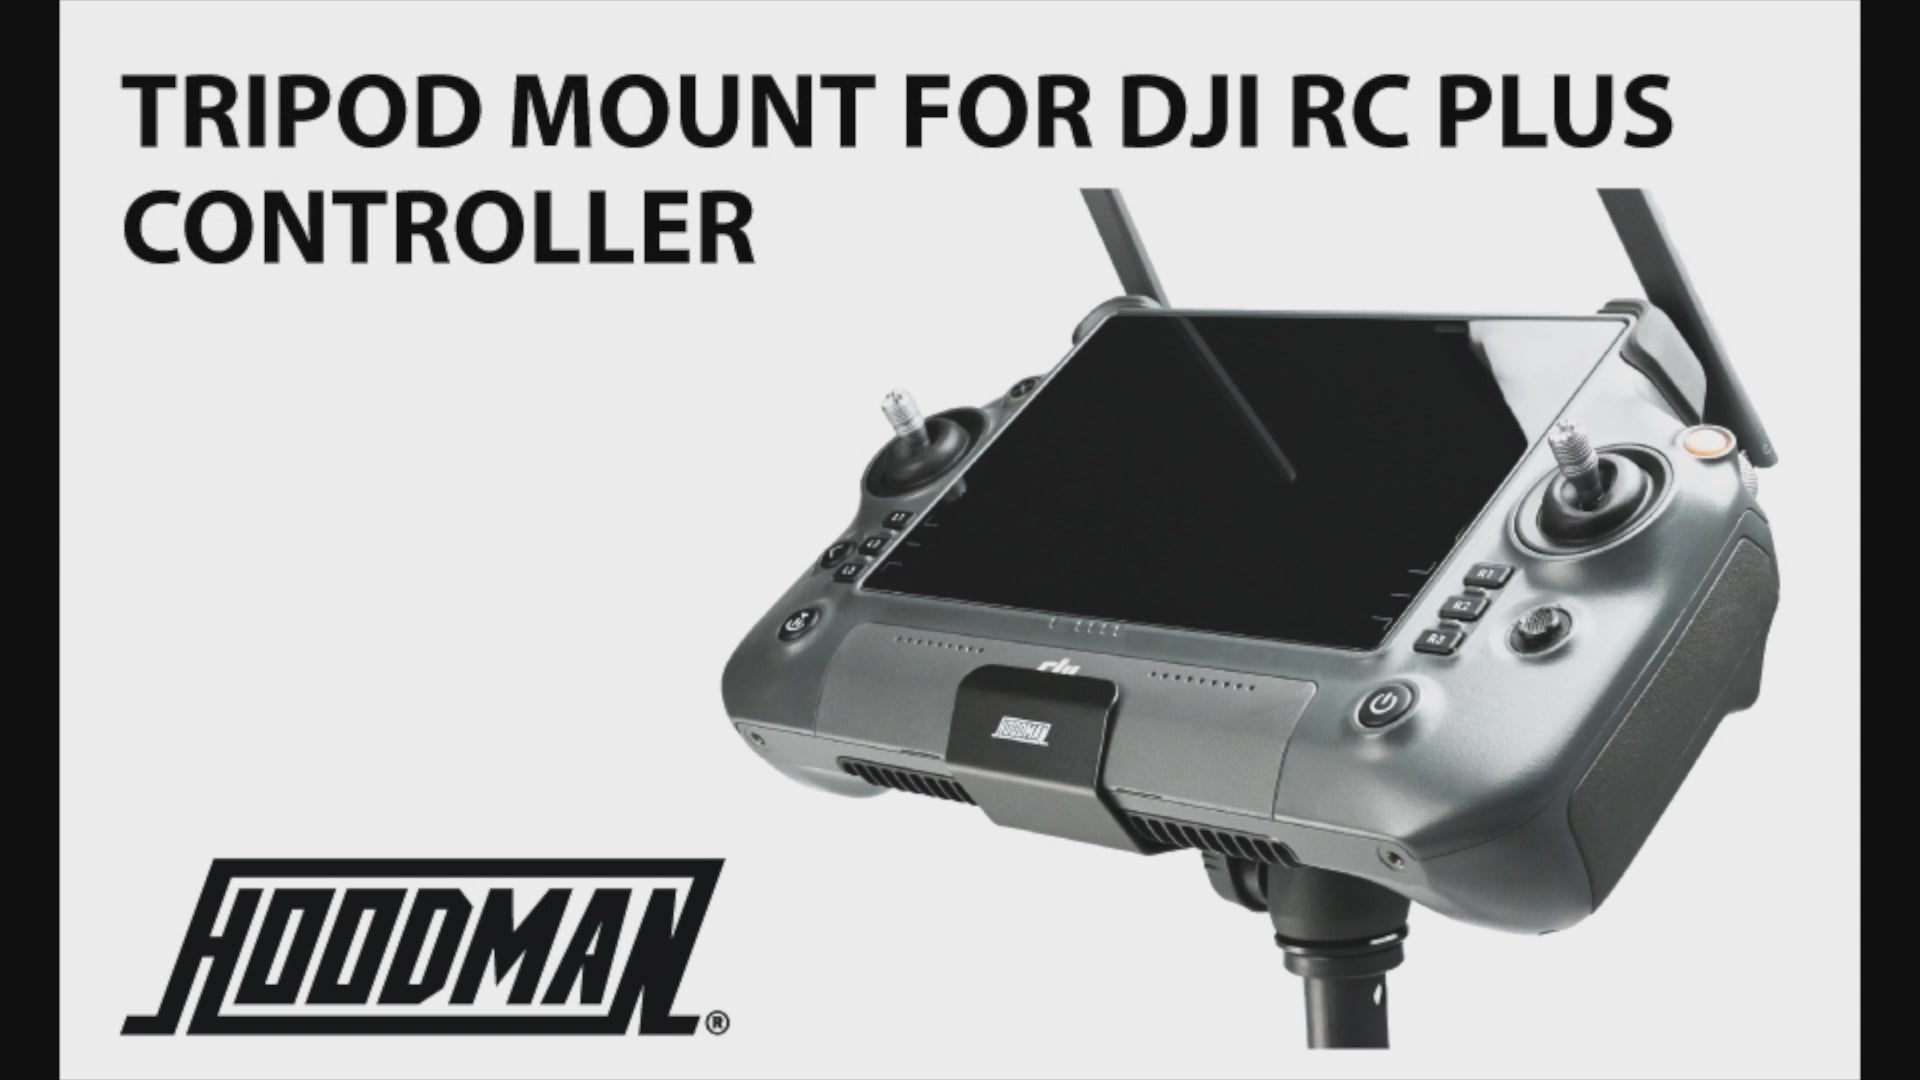 HOODMAN DRONE CONTROLLER TRIPOD MOUNT FOR DJI RC PLUS